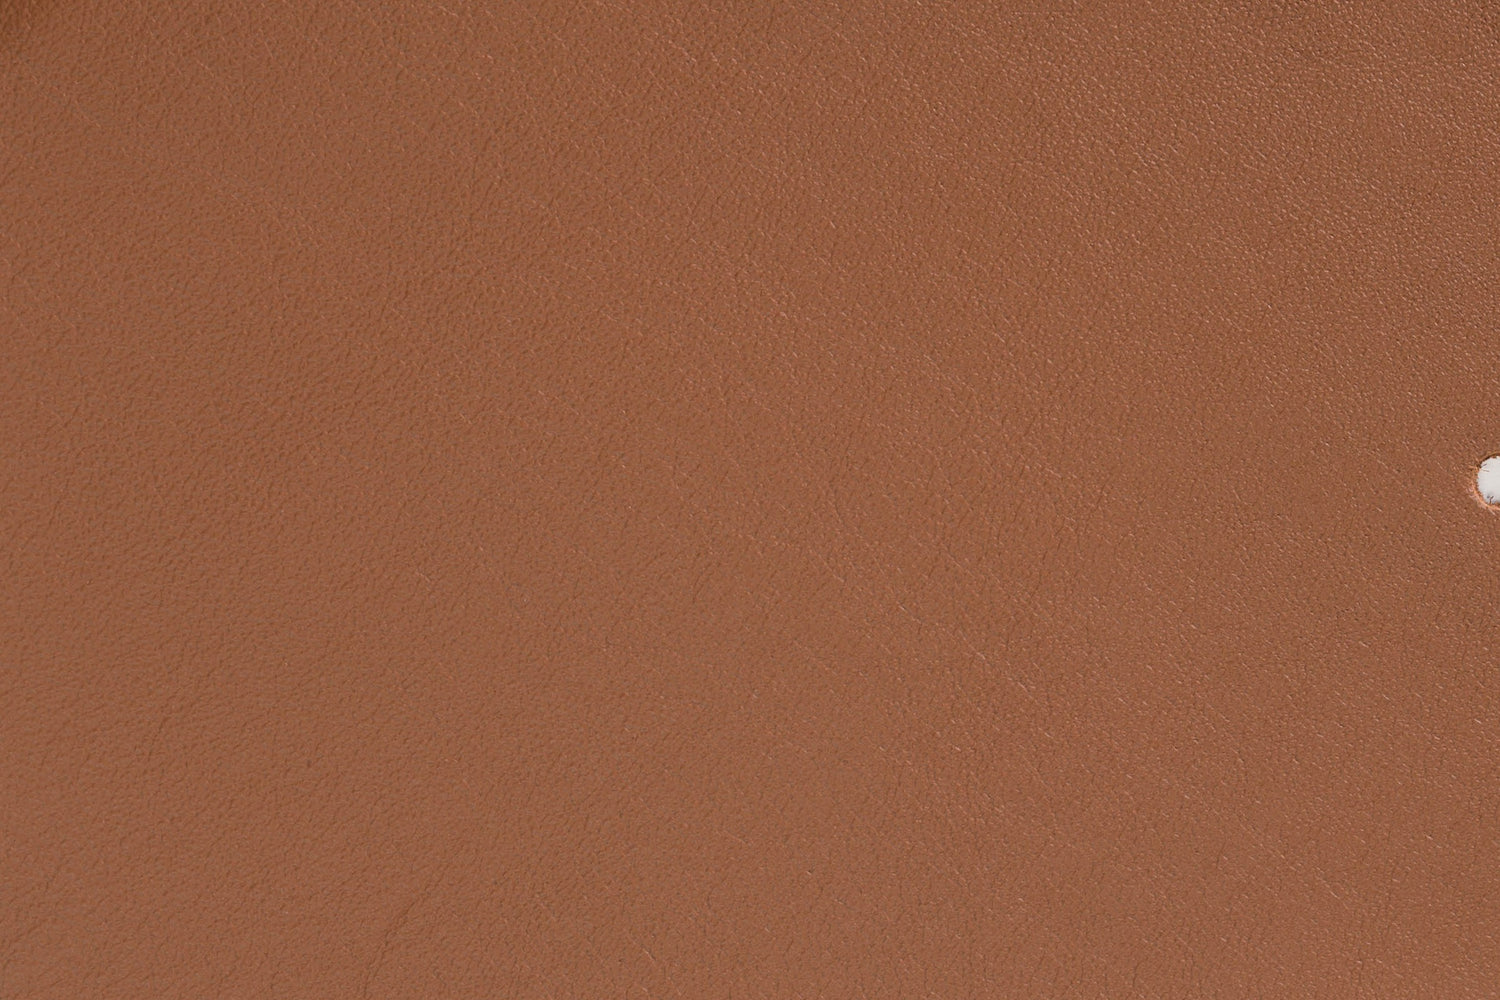 Elmosoft 33004 Brown leather